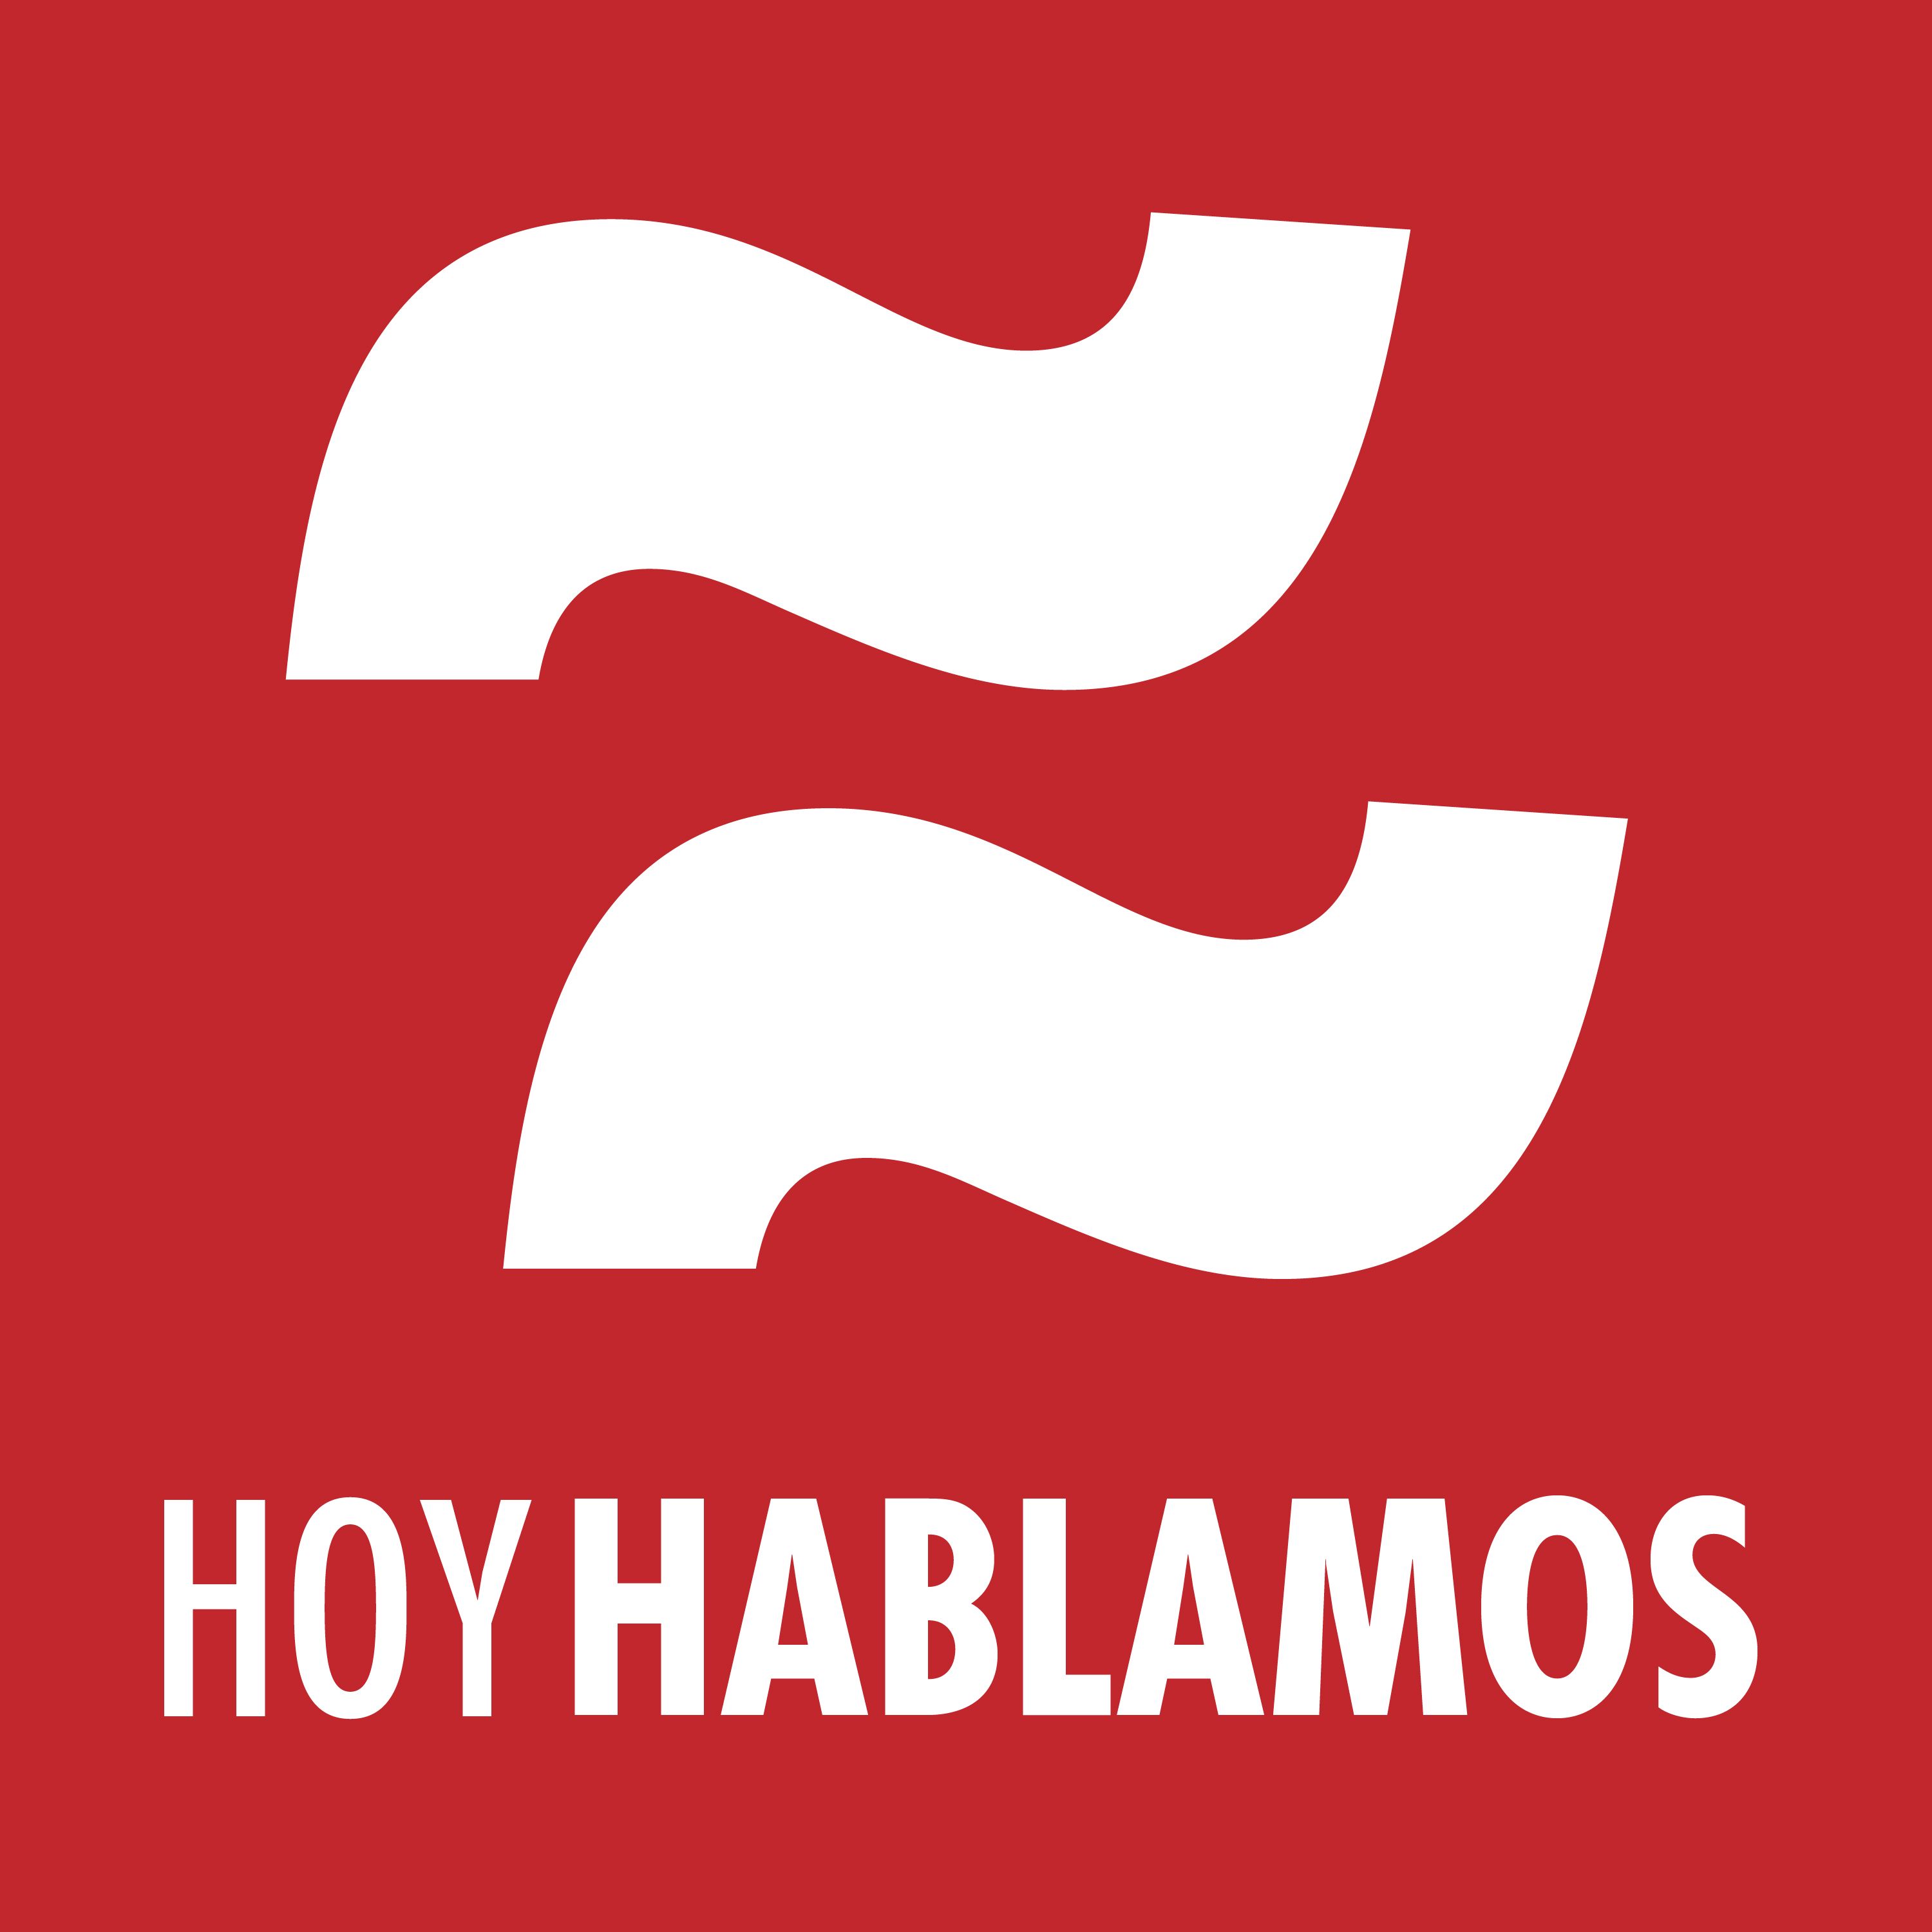 Podcast diario para aprender español - Learn Spanish Daily Podcast